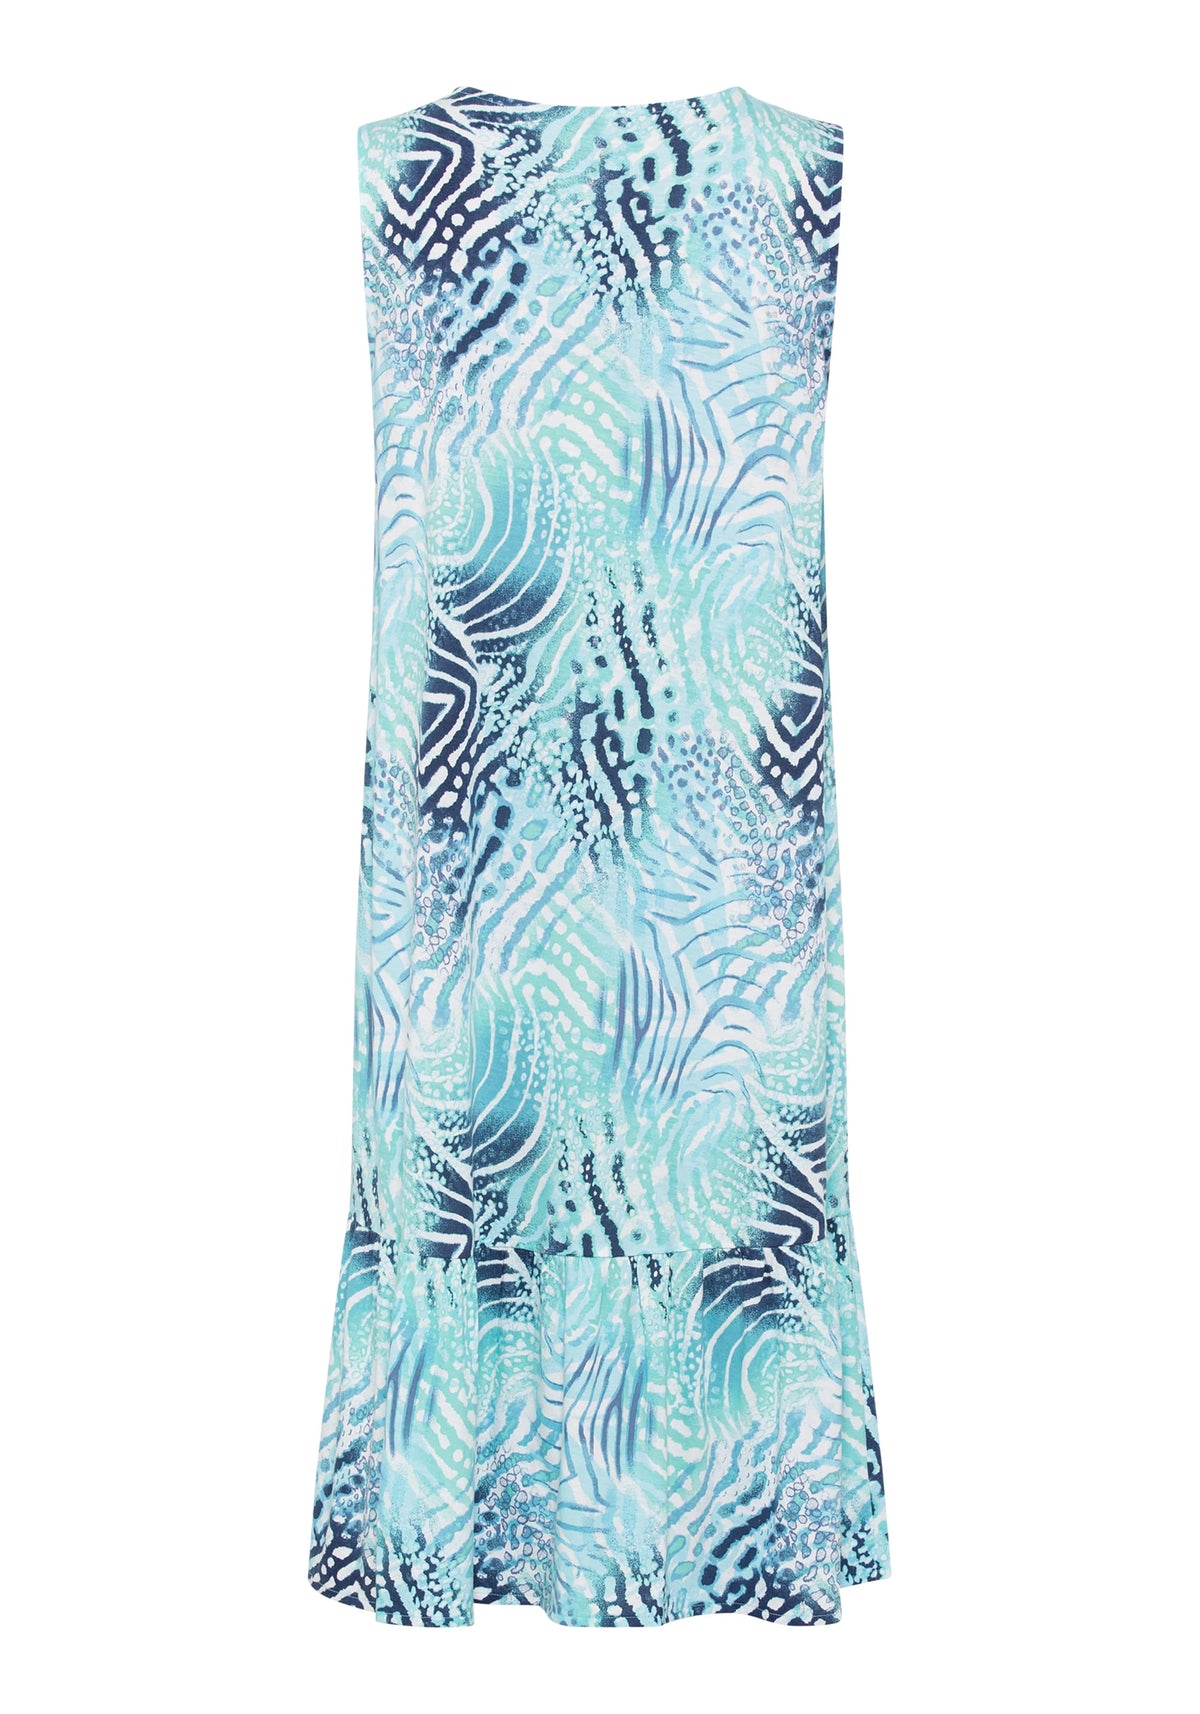 Sleeveless Water Print Dress containing TENCEL™ Modal